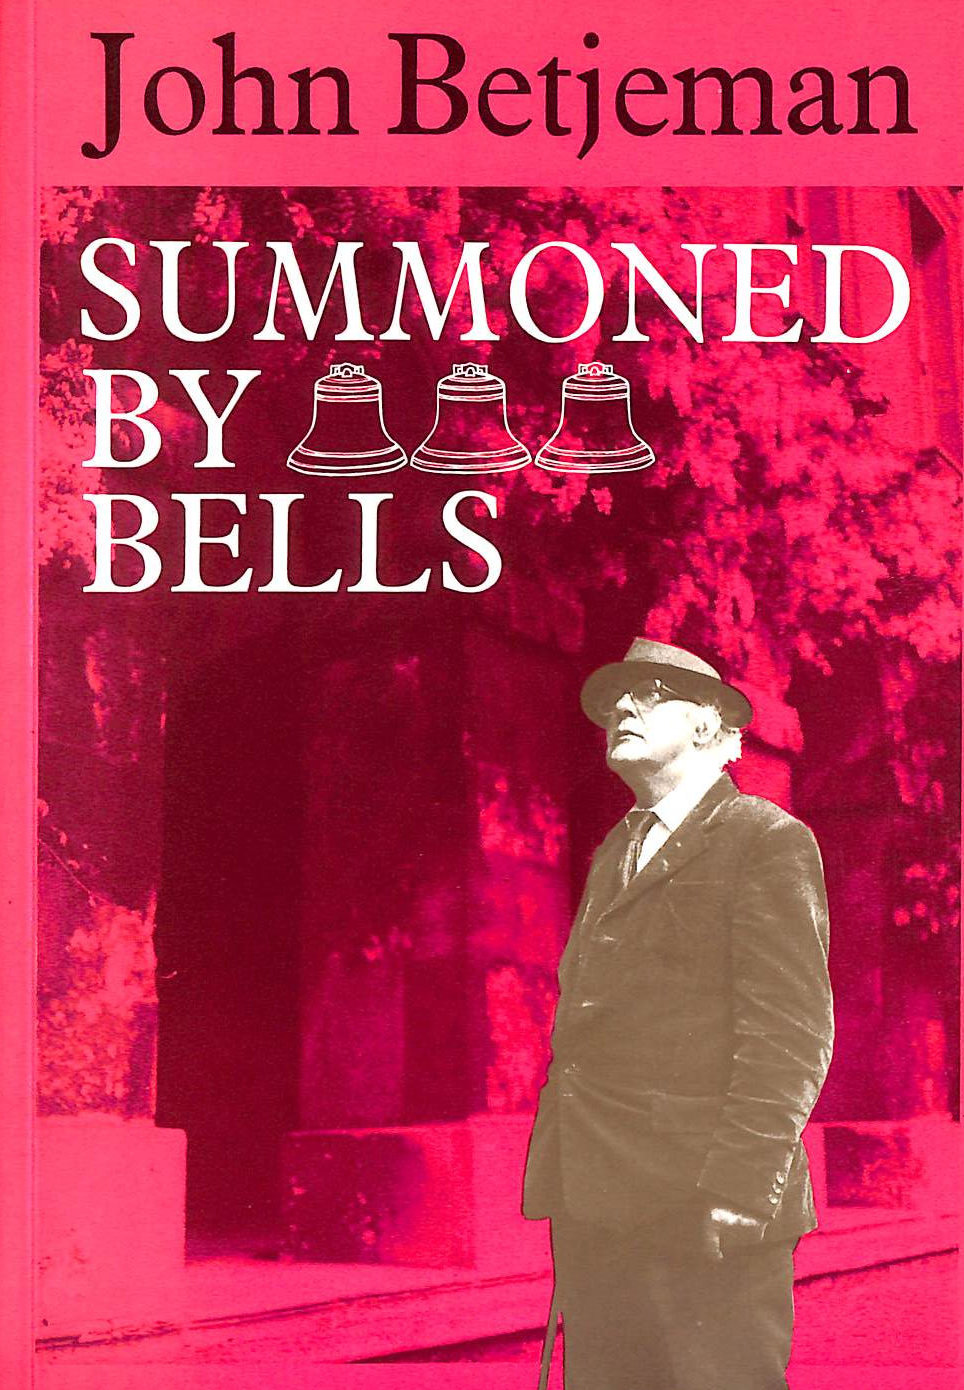 BETJEMAN, JOHN - Summoned by Bells